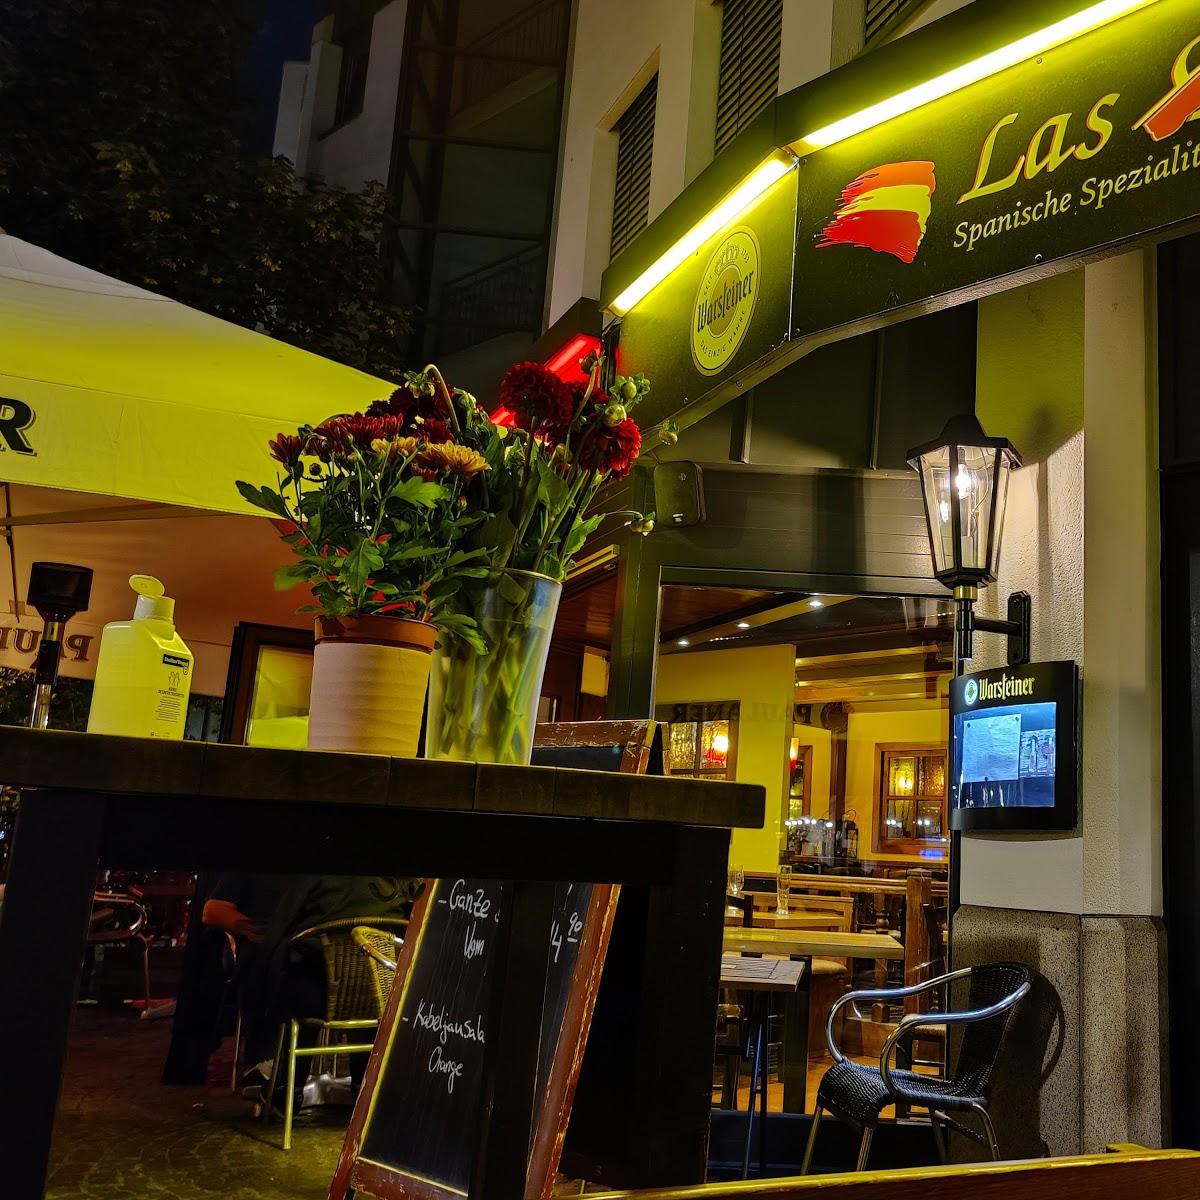 Restaurant "Las Tapas Bielefeld" in  Bielefeld